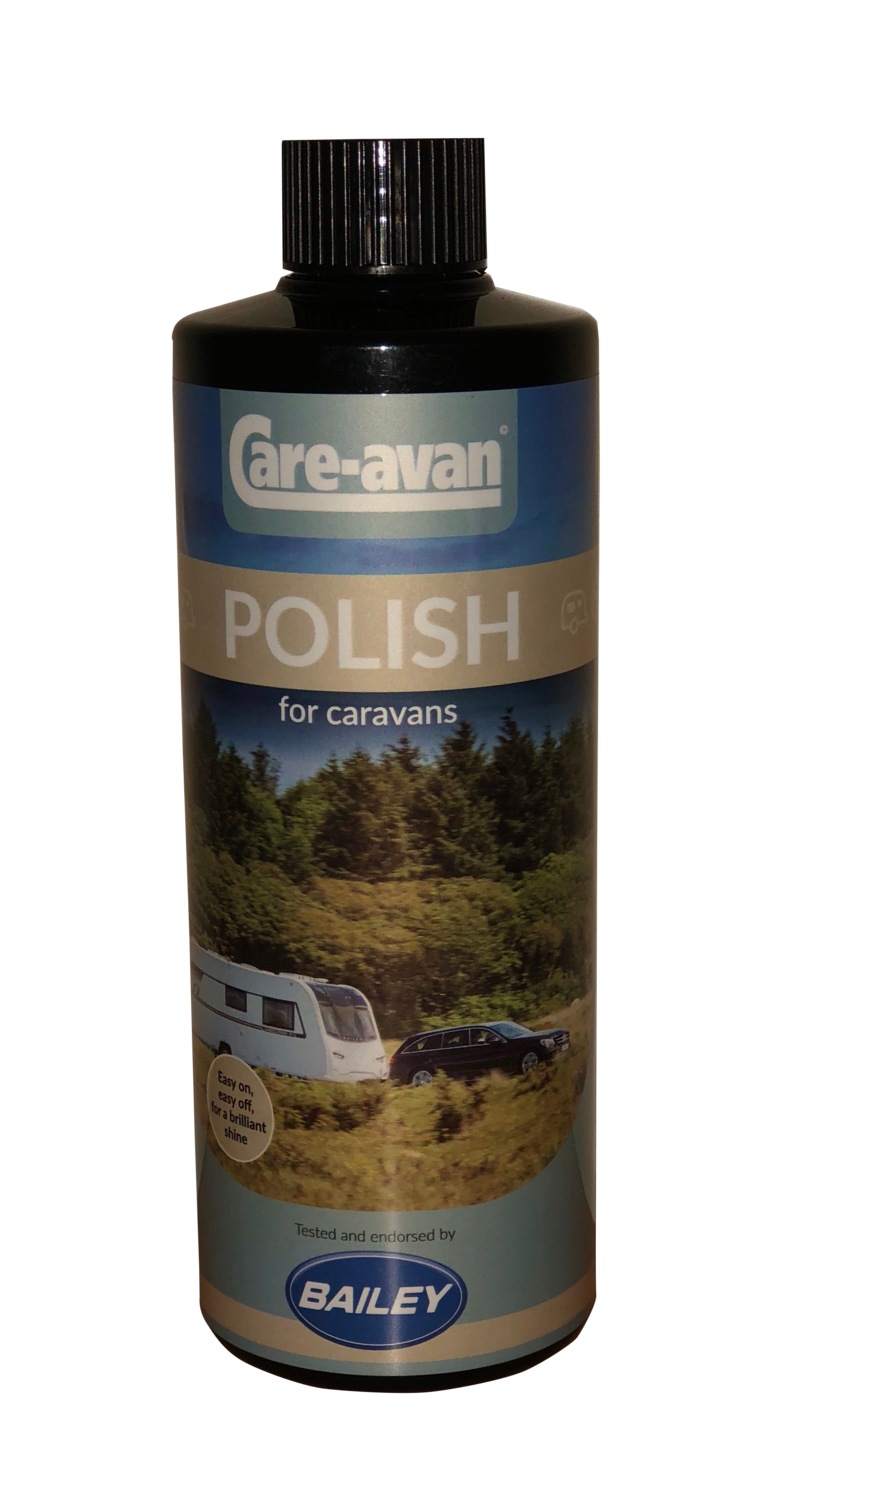 Care-avan Caravan Polish (500mls)